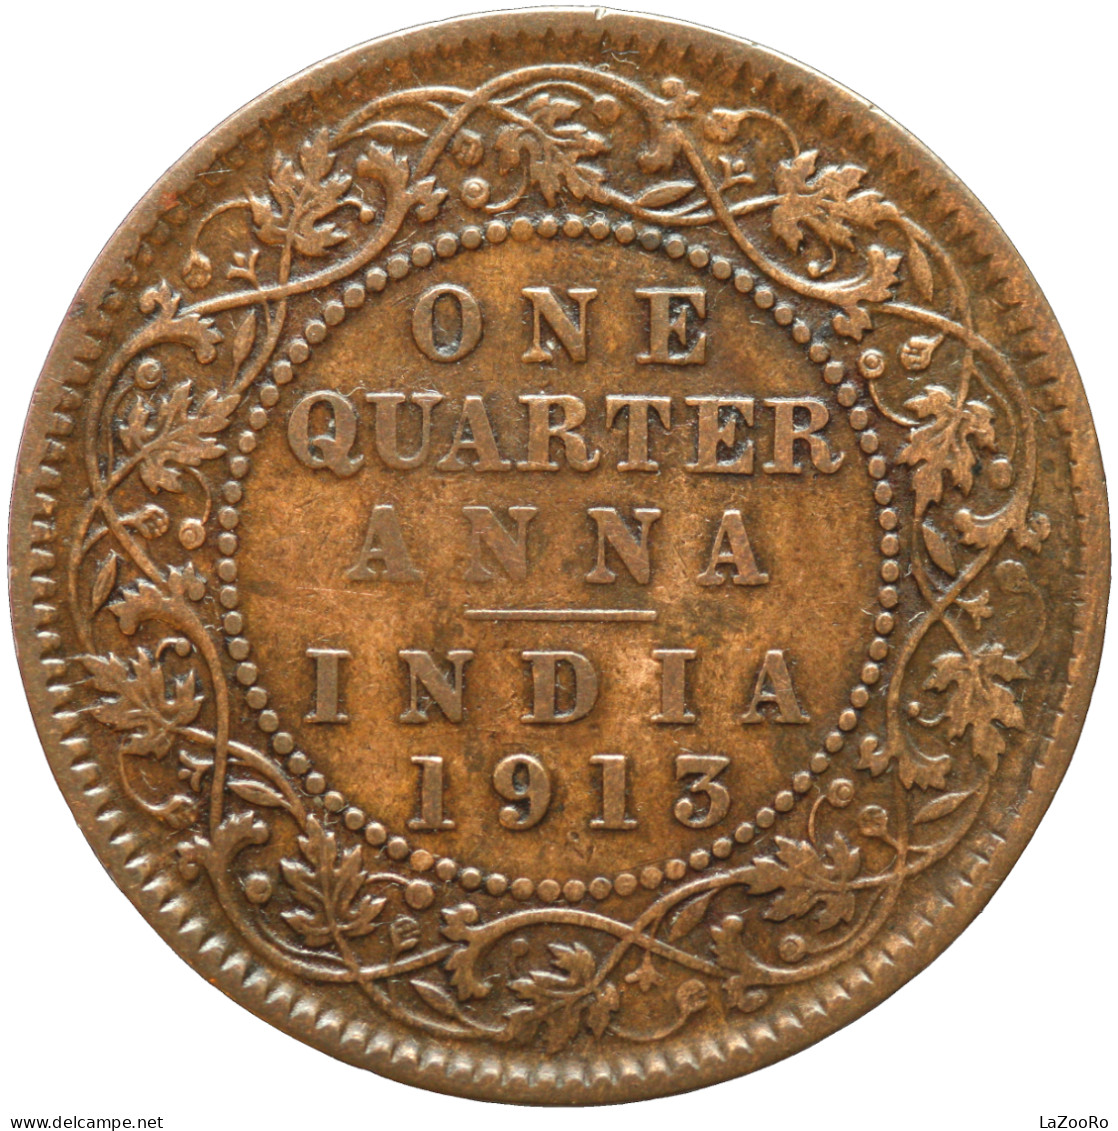 LaZooRo: British India 1/4 Anna 1913 VF - Colonies